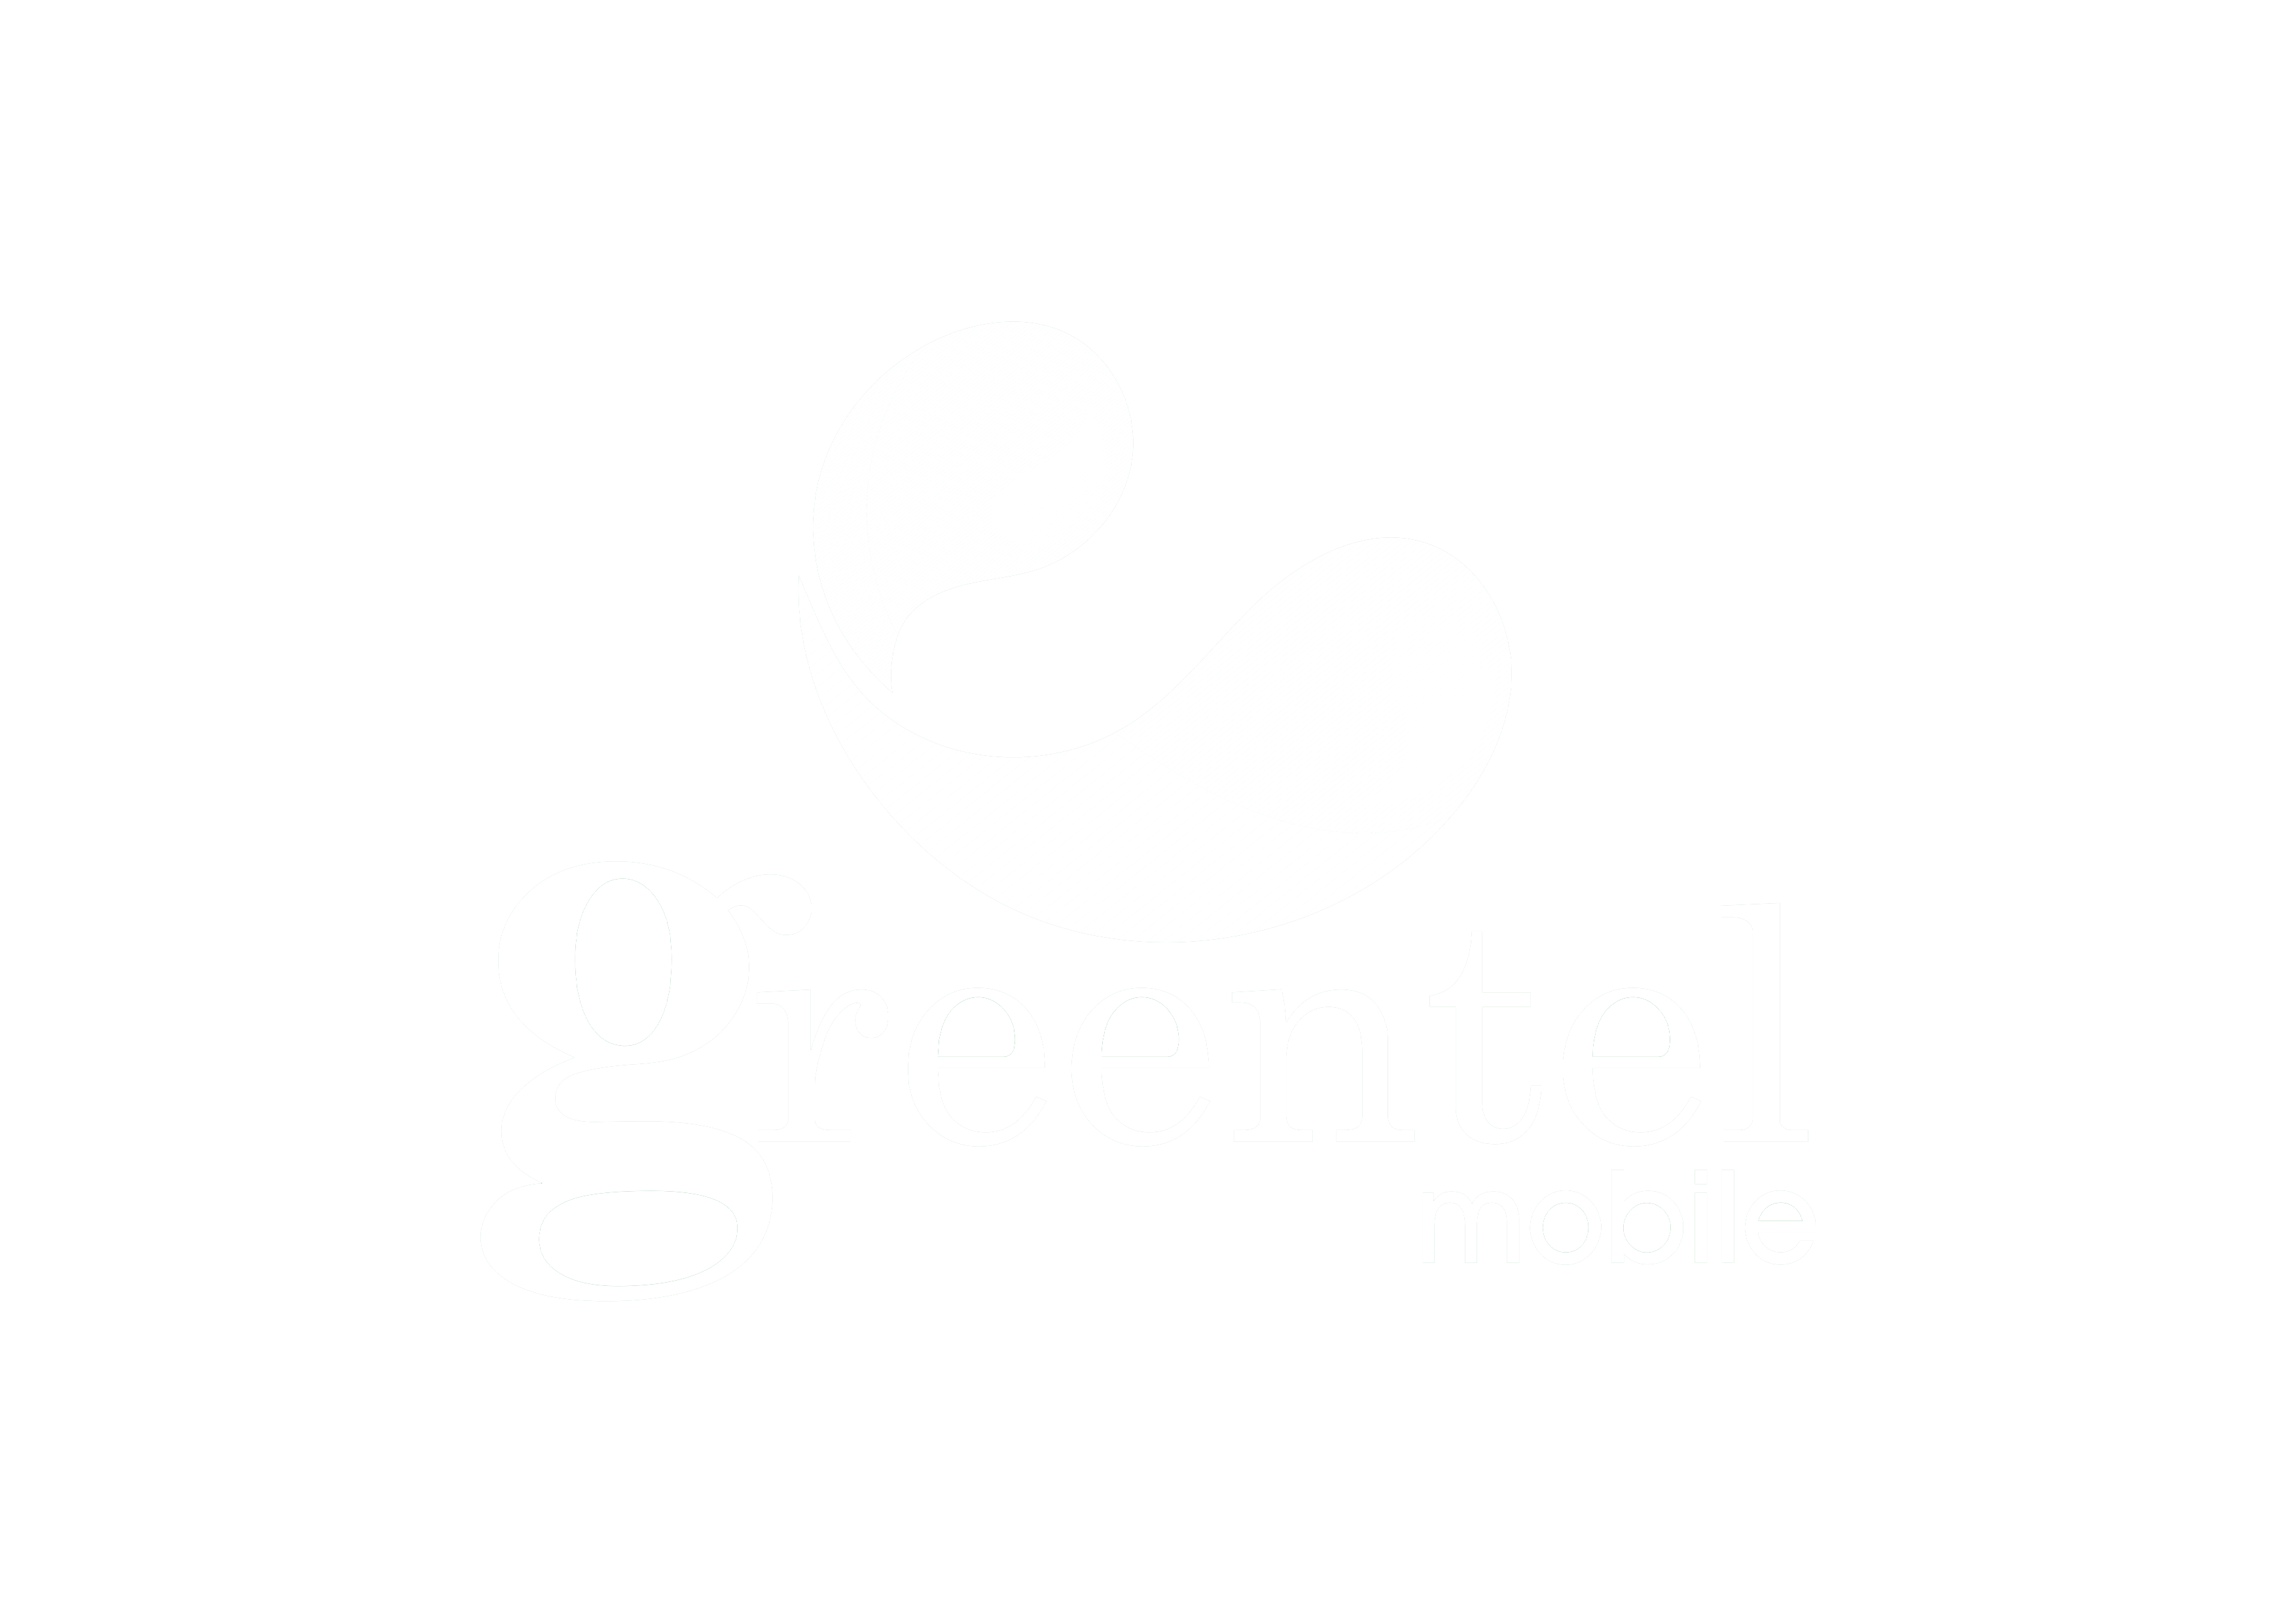 Greentel logo w